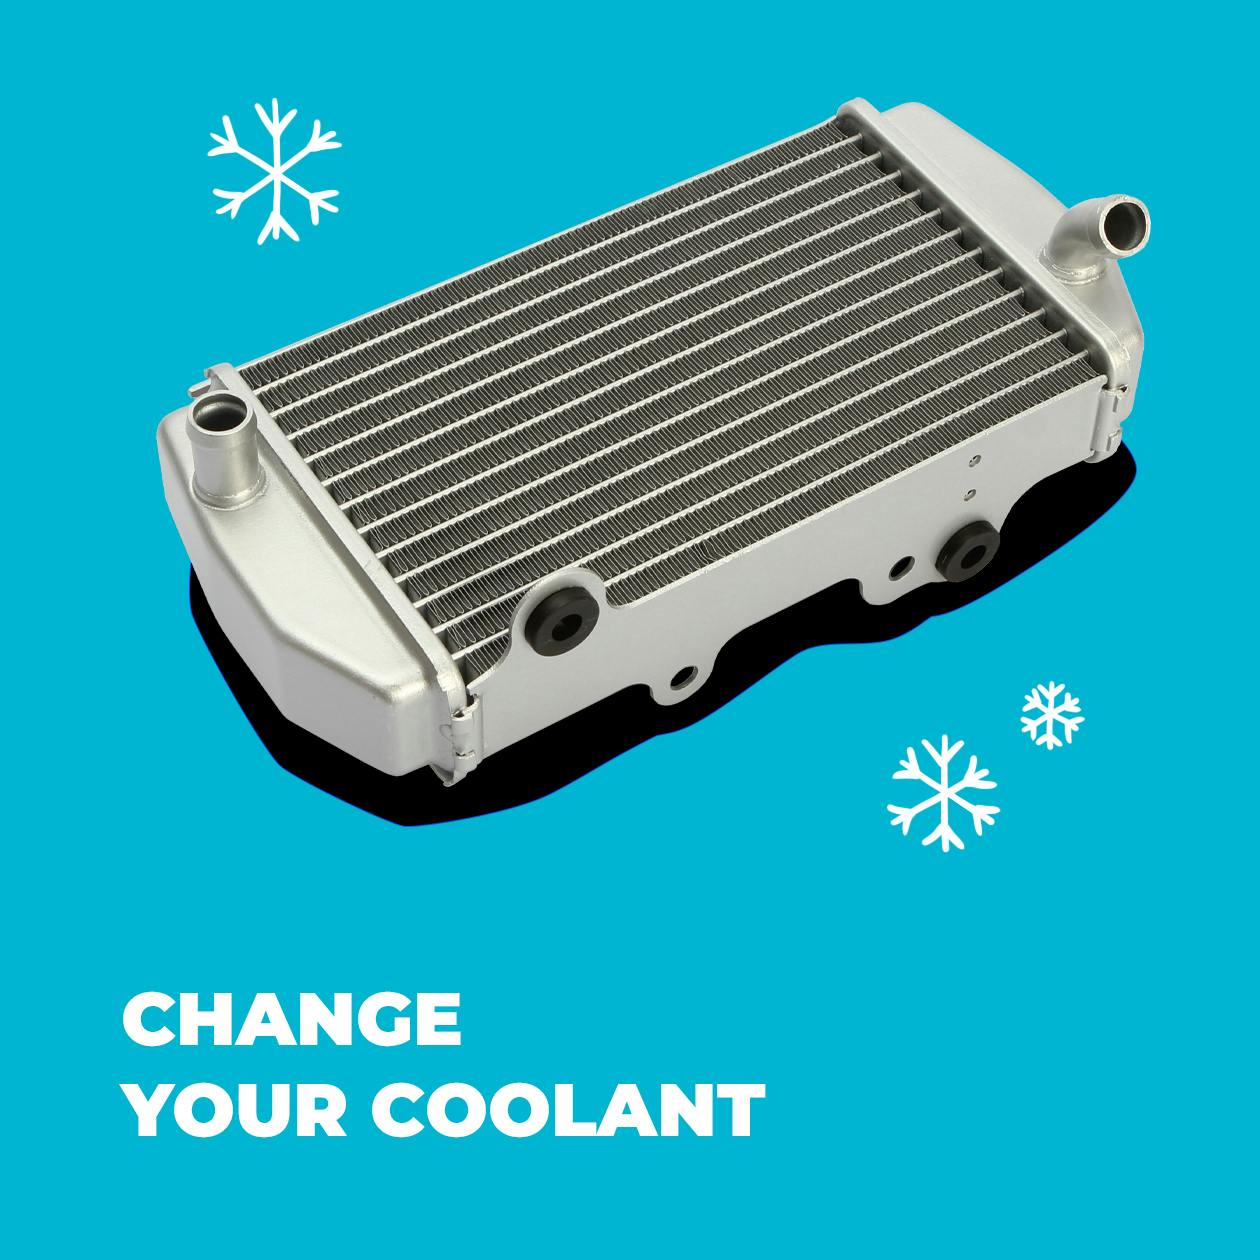 Change your coolant